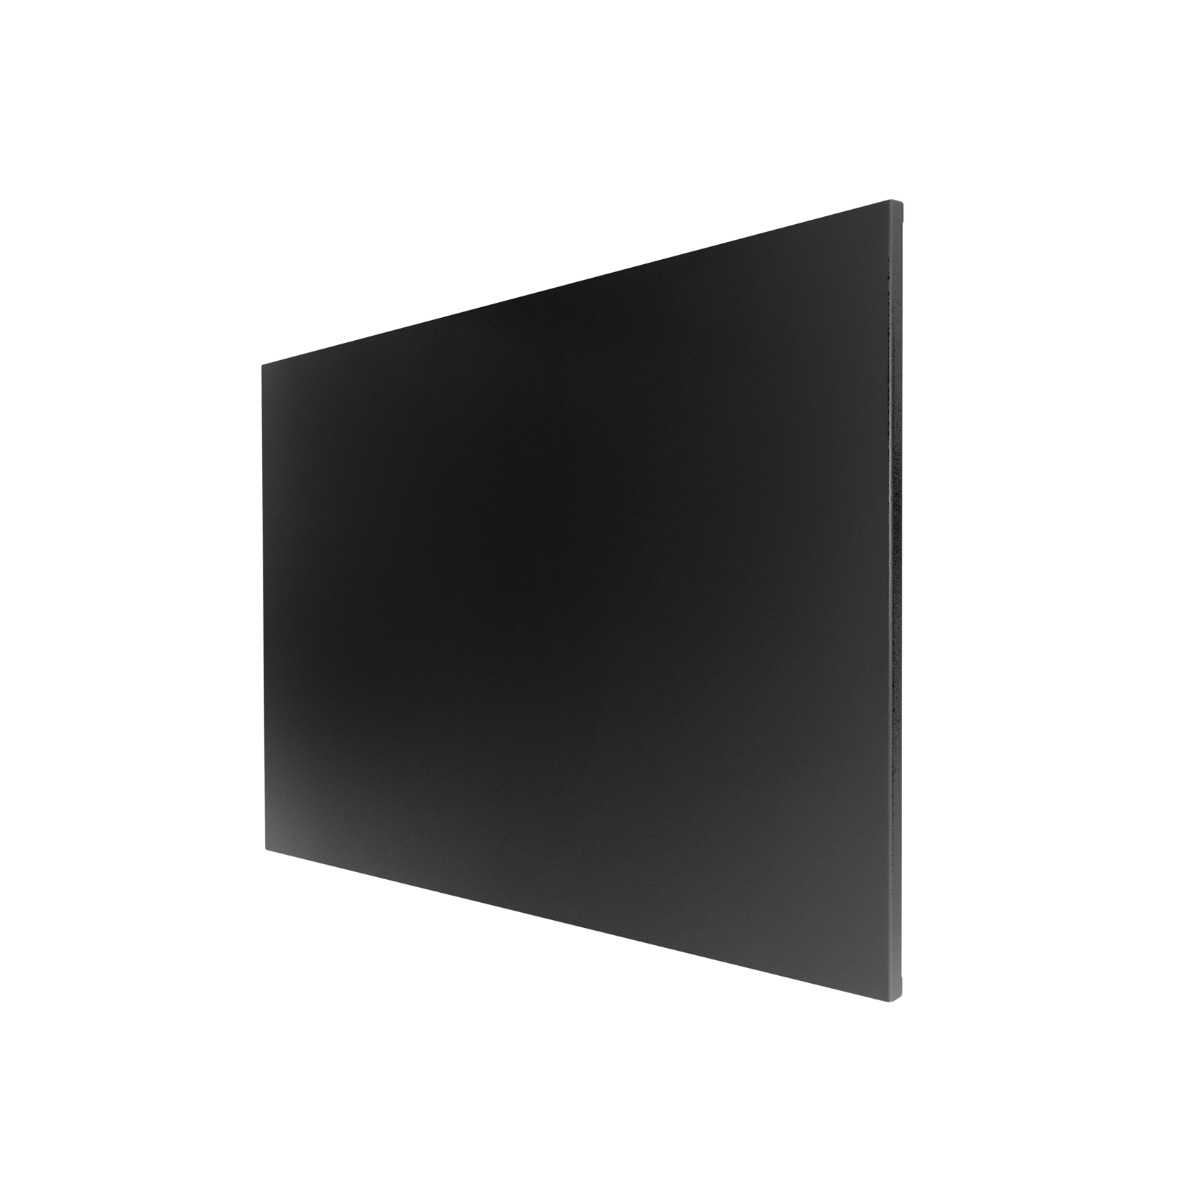 Technotherm ISP Frameless Infrared Heating Panel - Black 950w (1500 x 600mm)